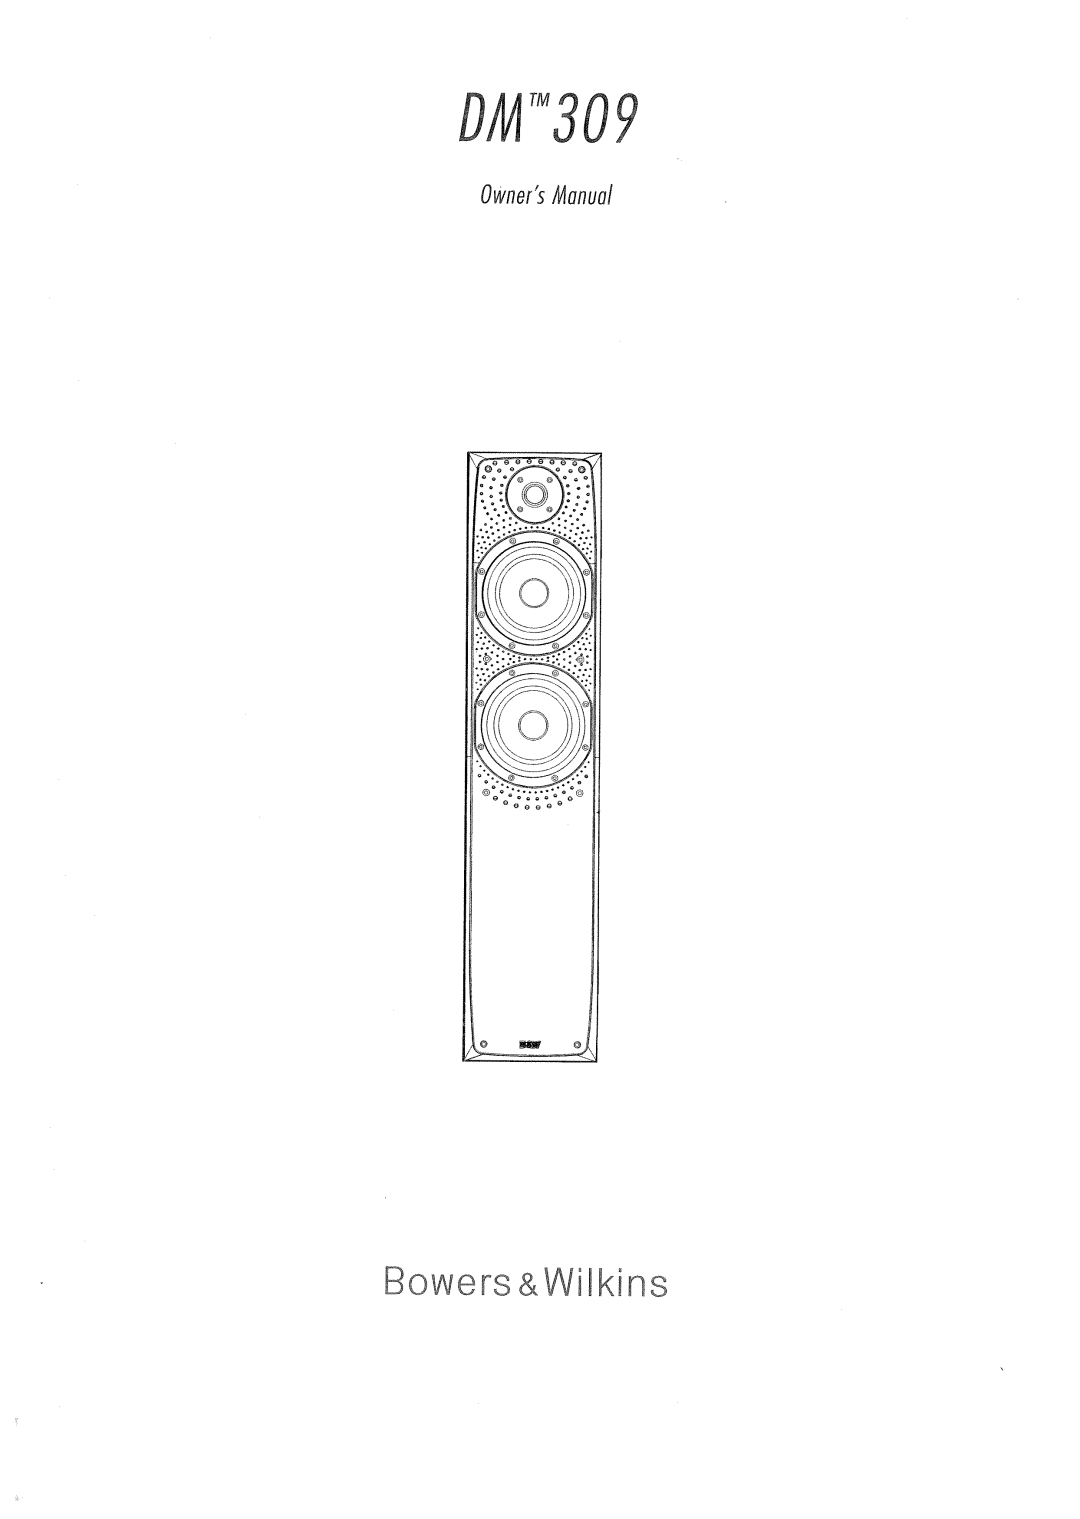 Bowers & Wilkins DM 309 manual 